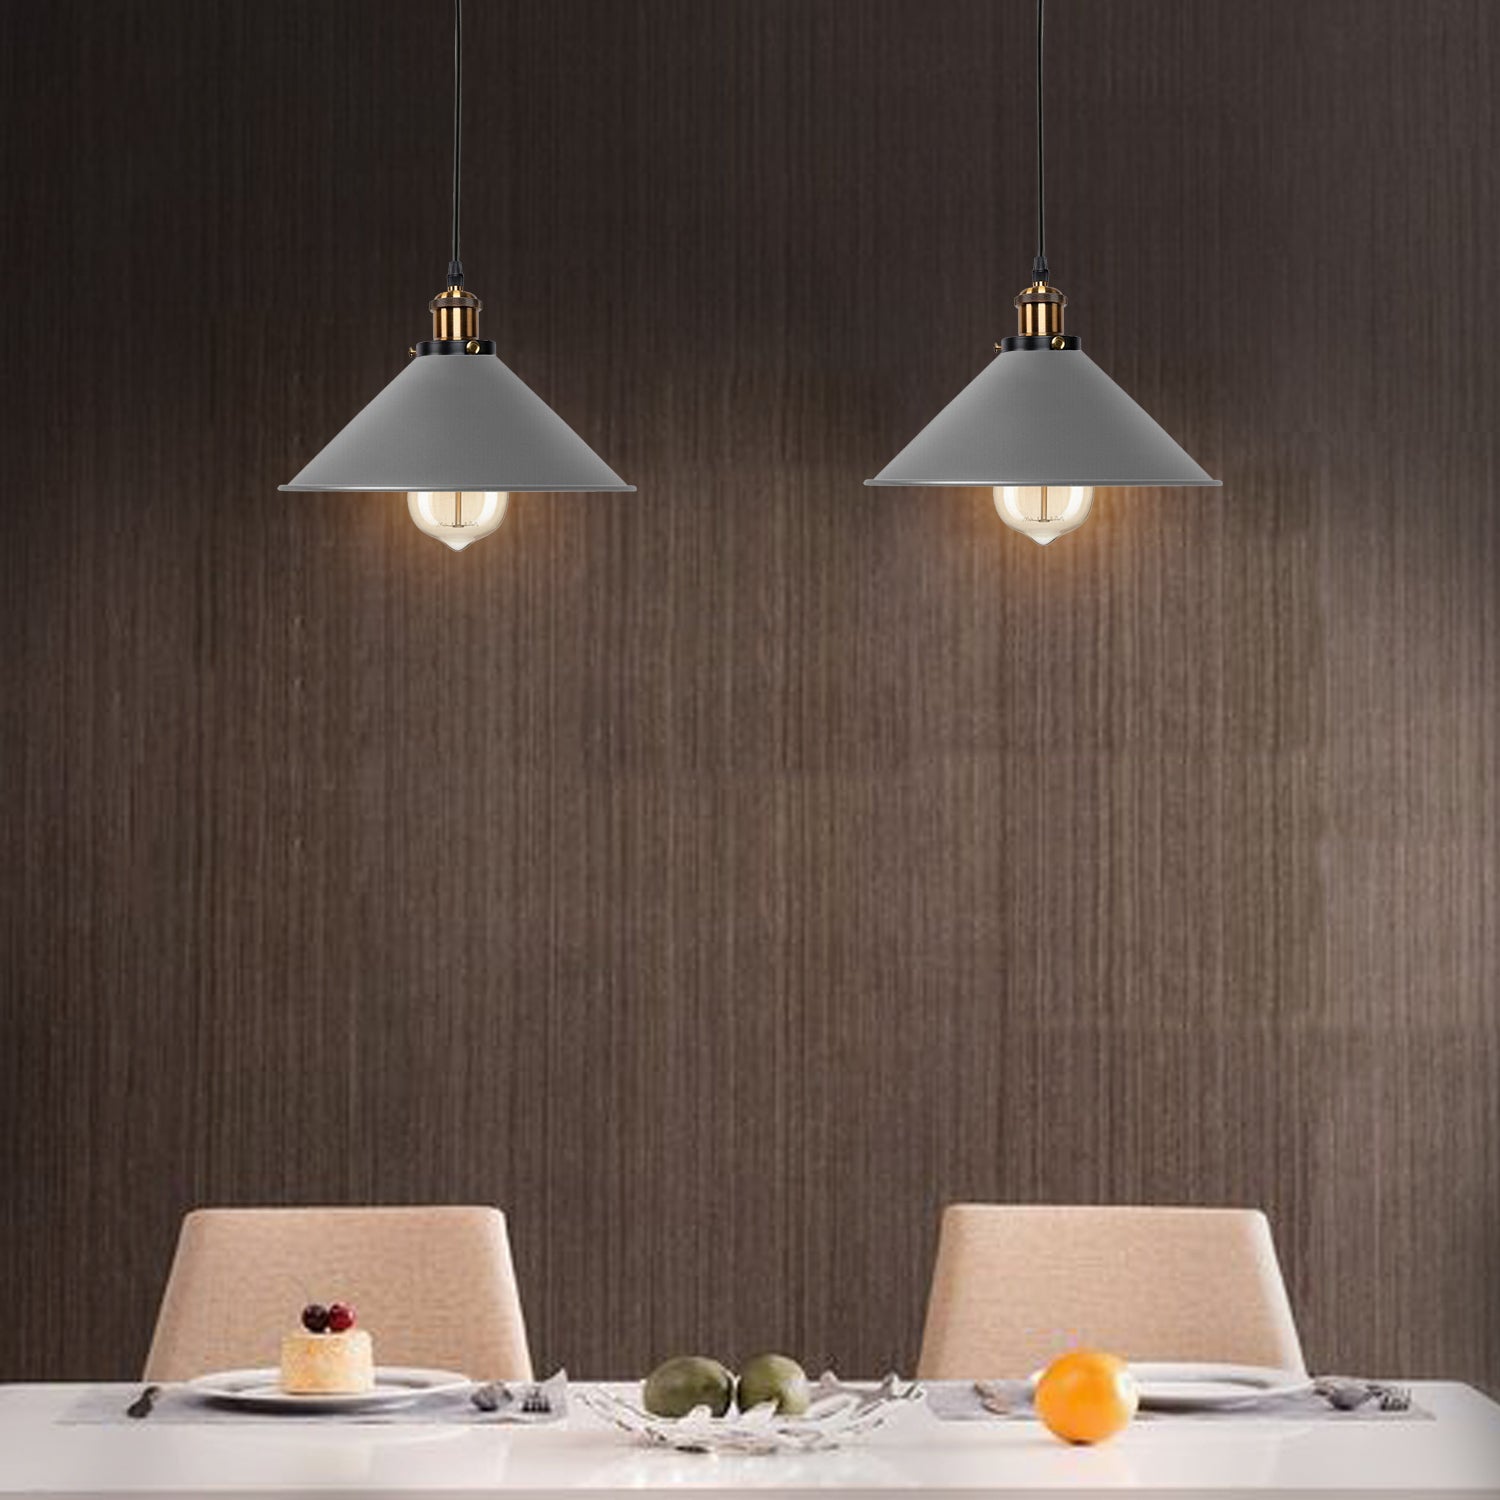 Grey 2 Way Retro Industrial Ceiling E27 Hanging Lamp Pendant Light~3503 - LEDSone UK Ltd